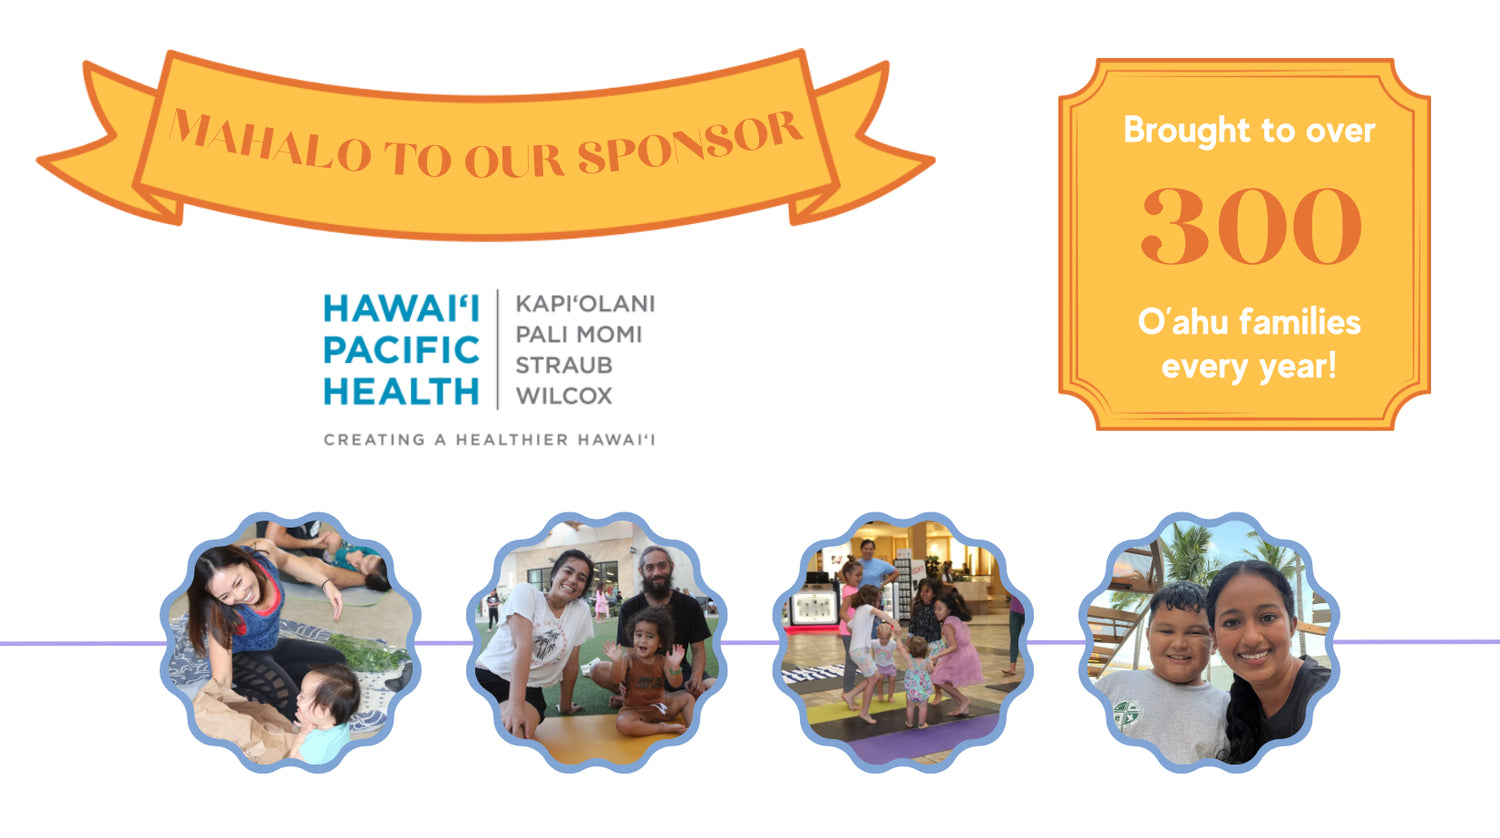 Family fun sponsored by Hawaii Pacific Health 